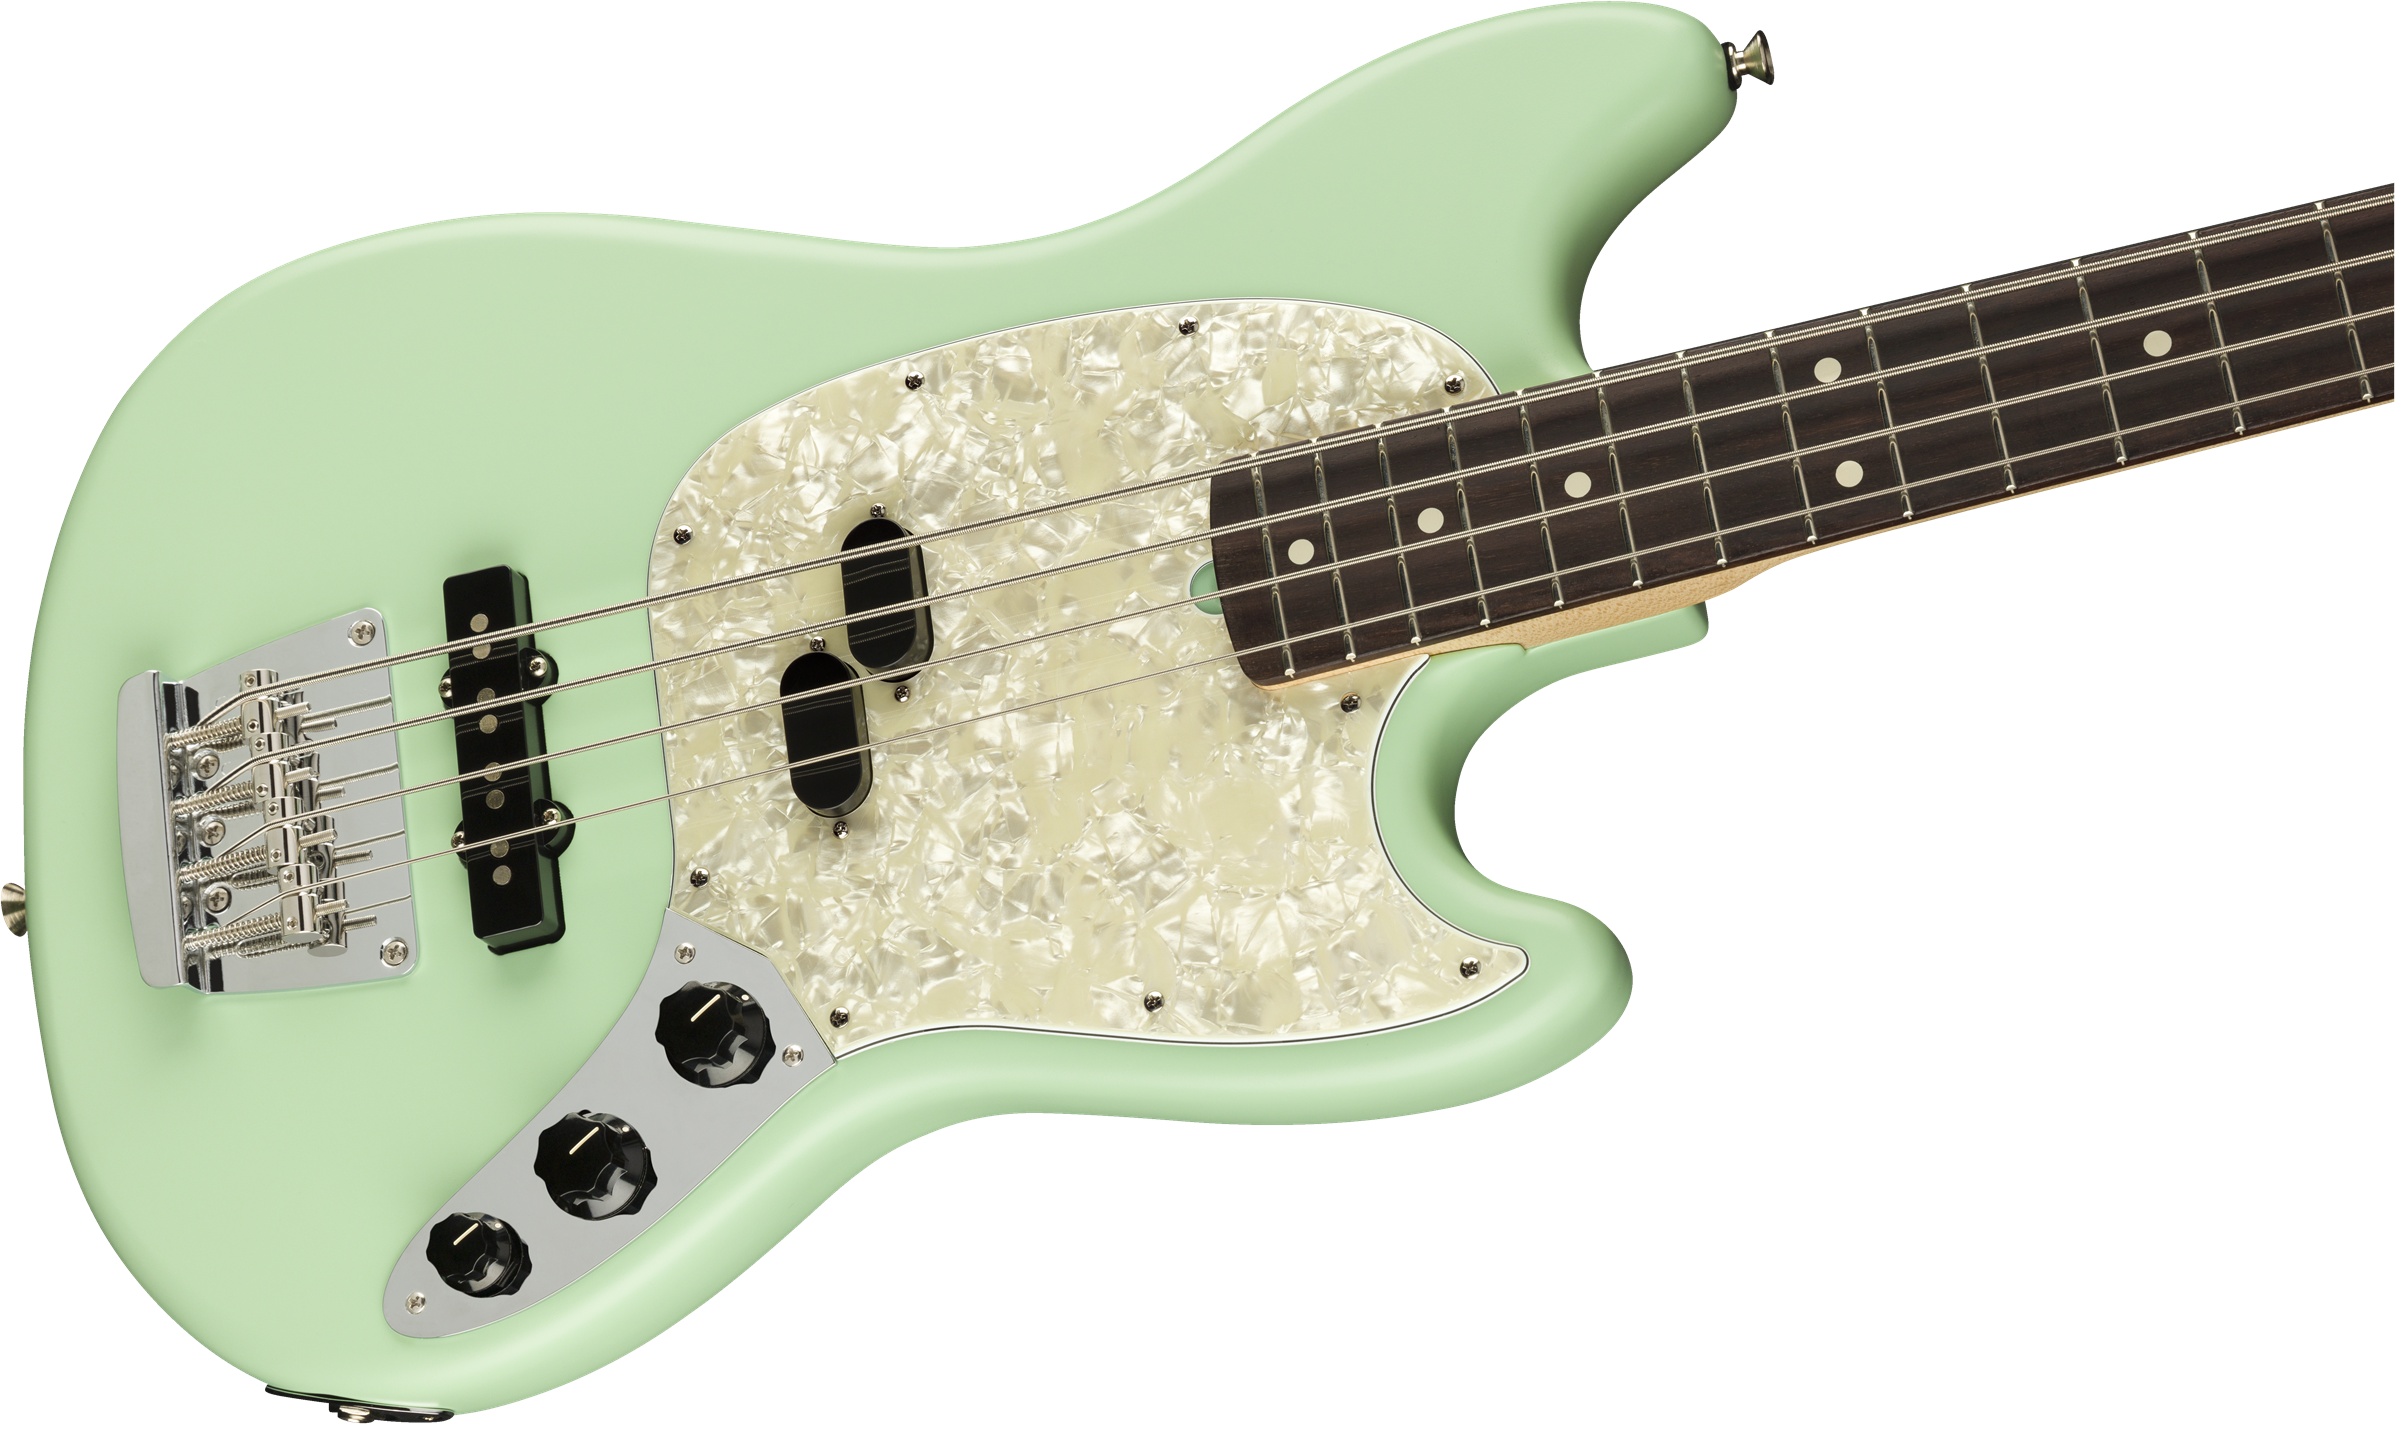 Fender American Performer Mustang Bass Rosewood Fingerboard - Satin Surf Green 0198620357